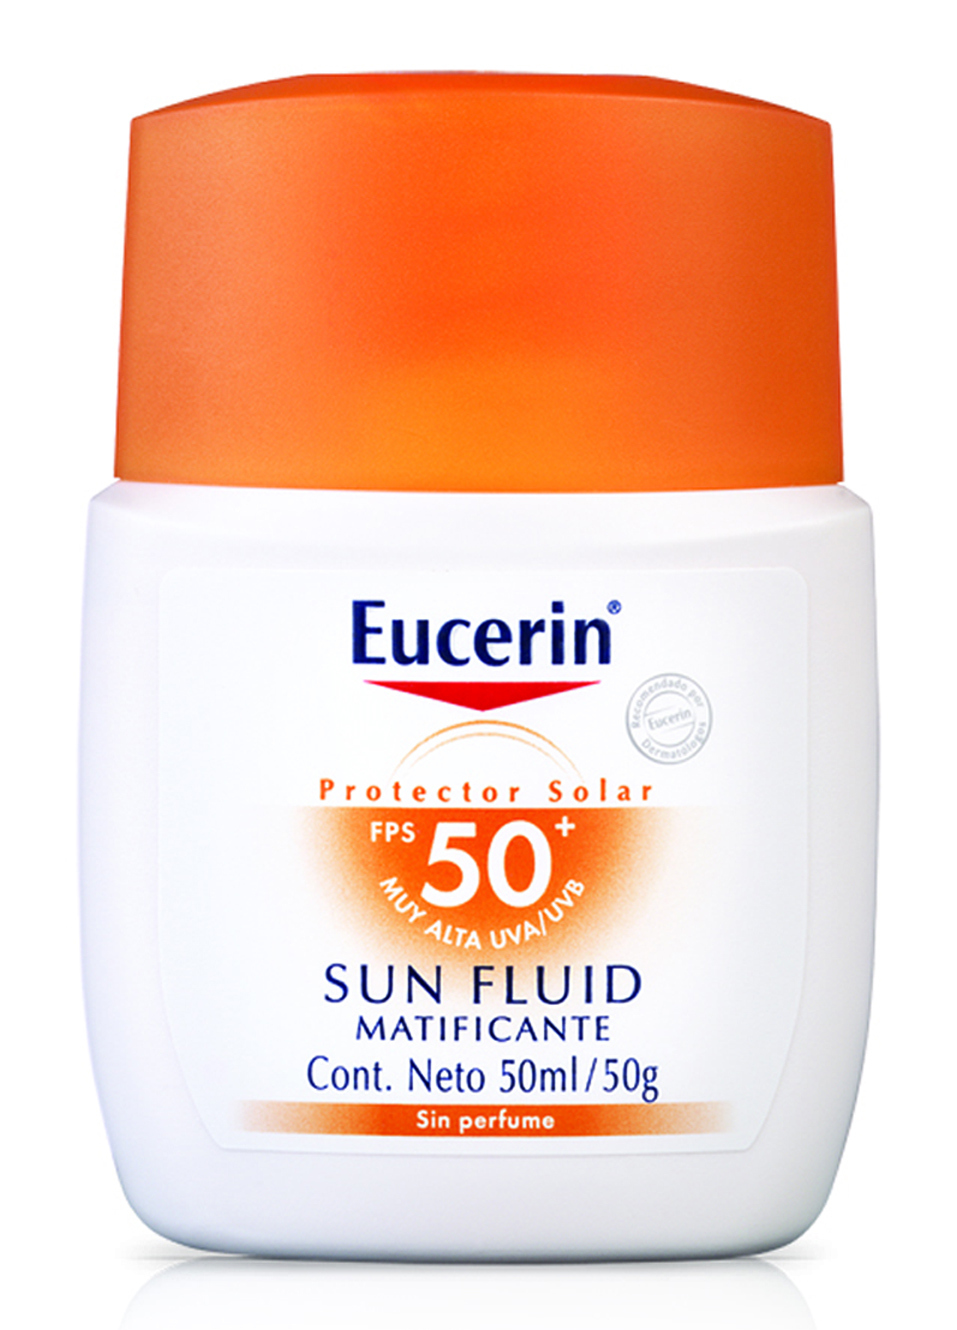 sun fluid matif 50